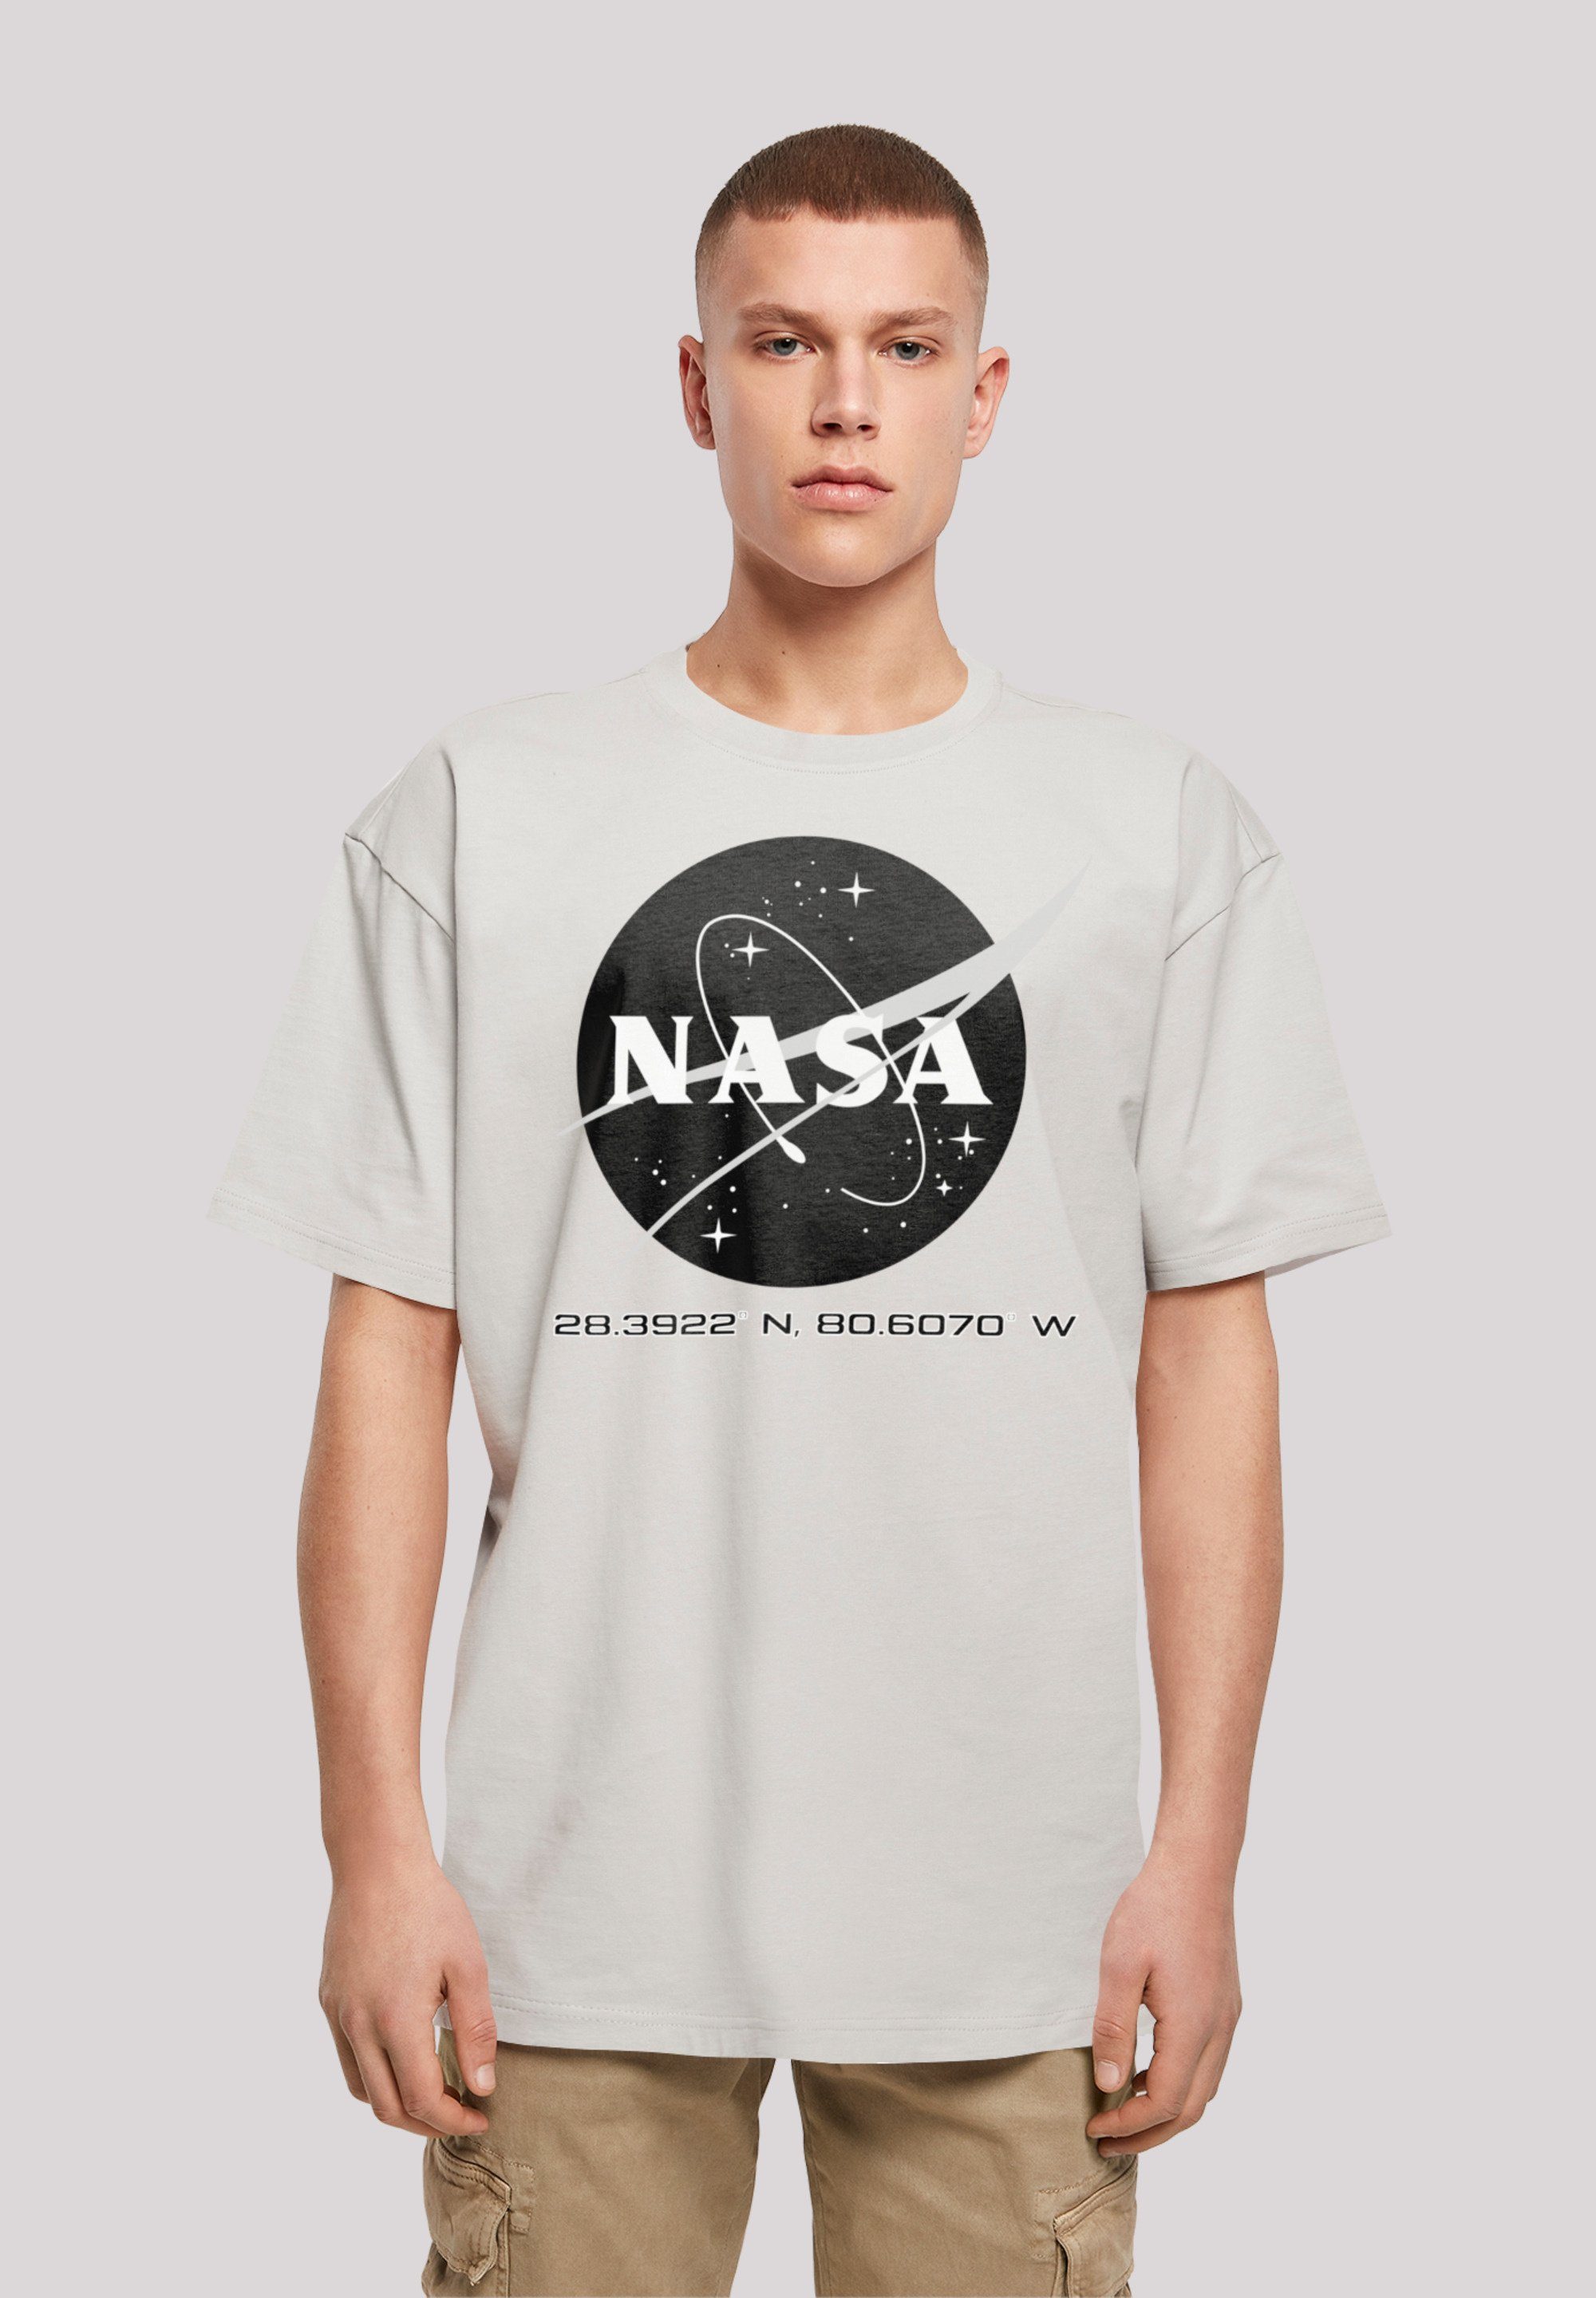 METAVERSE F4NT4STIC lightasphalt FASHION Print Meatball NASA PHIBER Logo T-Shirt